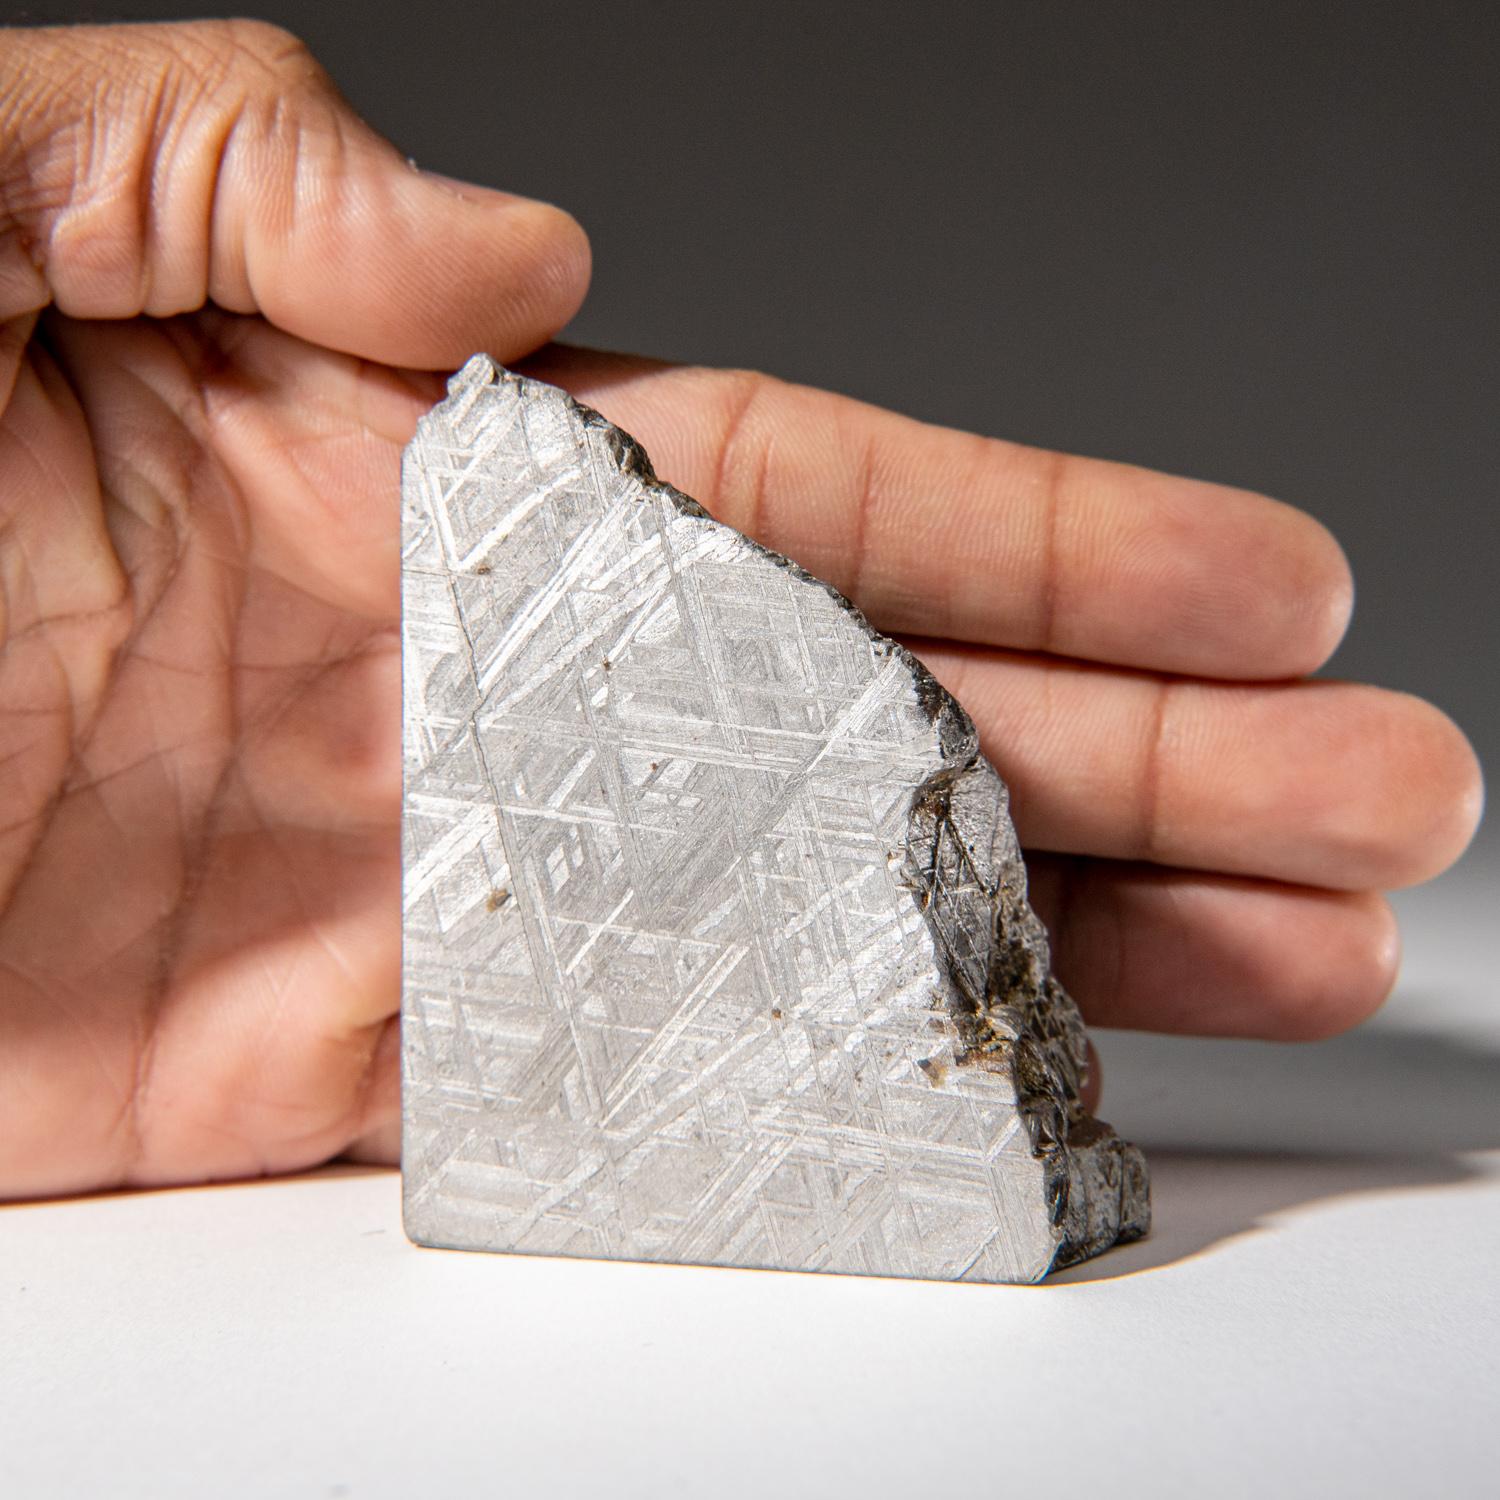 Rock Crystal Genuine Muonionalusta Meteorite Slice (1.15 lbs) For Sale